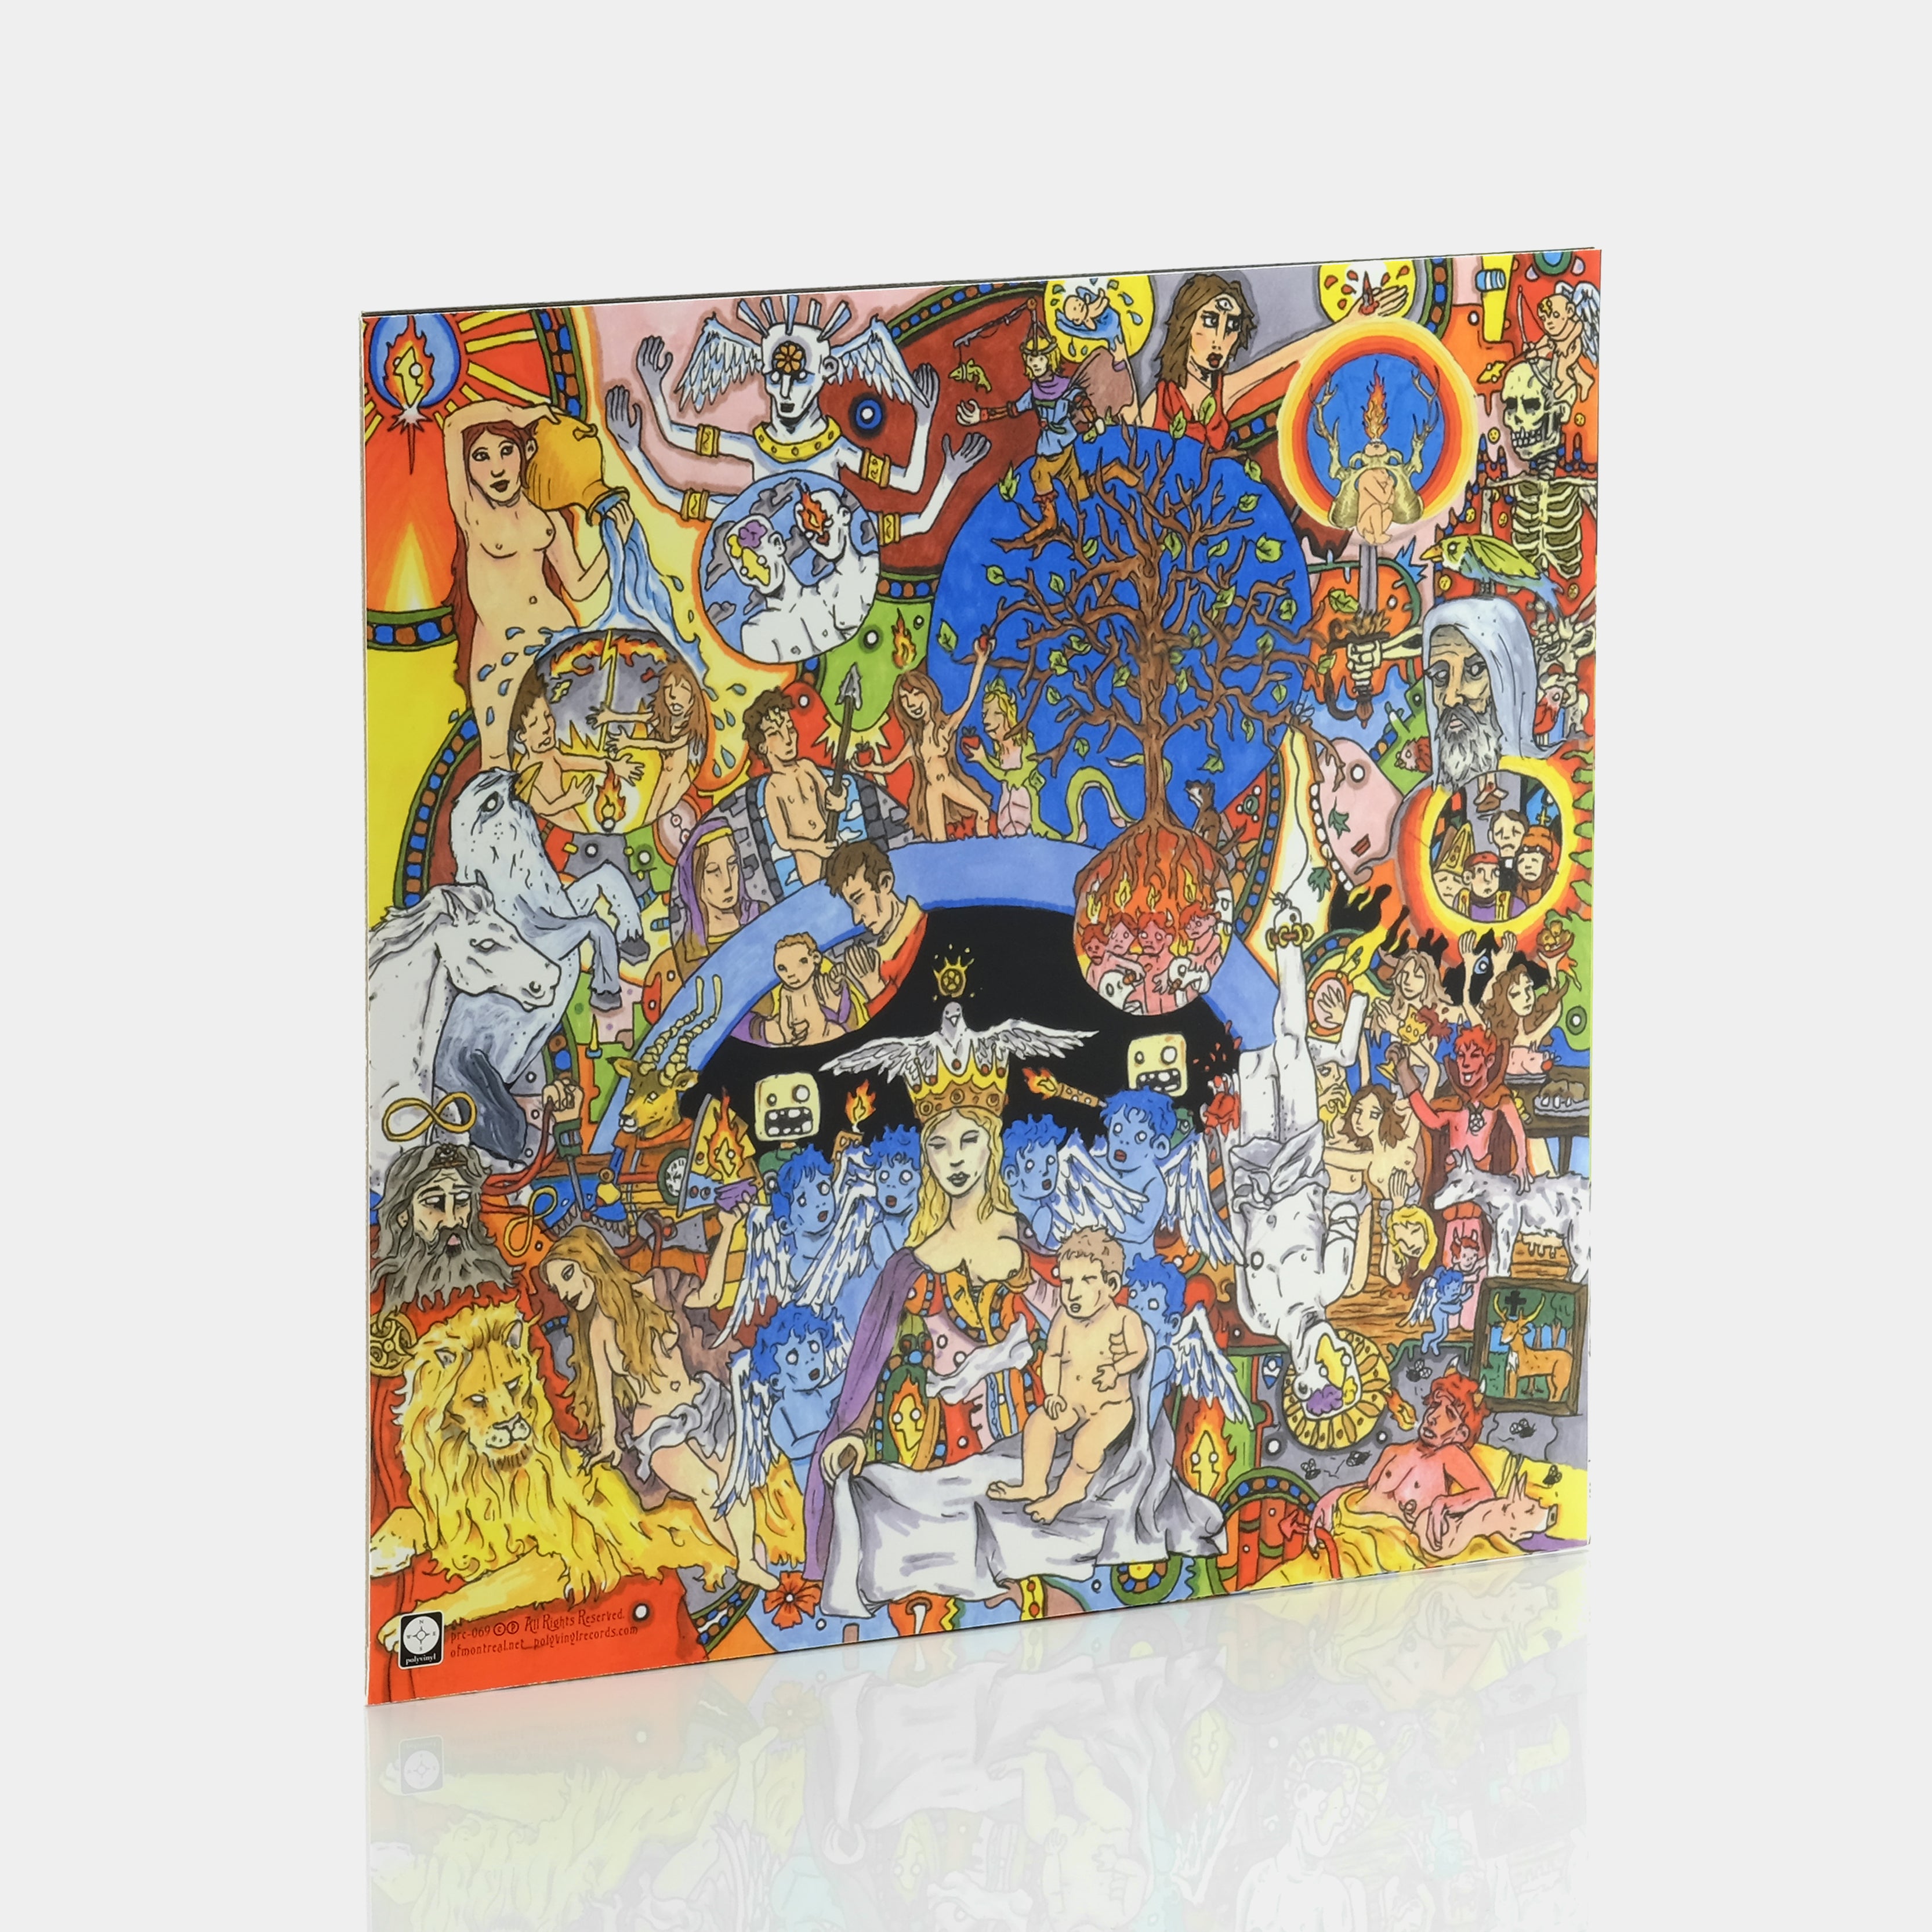 Of Montreal - Satanic Panic In The Attic LP Orange & Black Swirl Vinyl Record